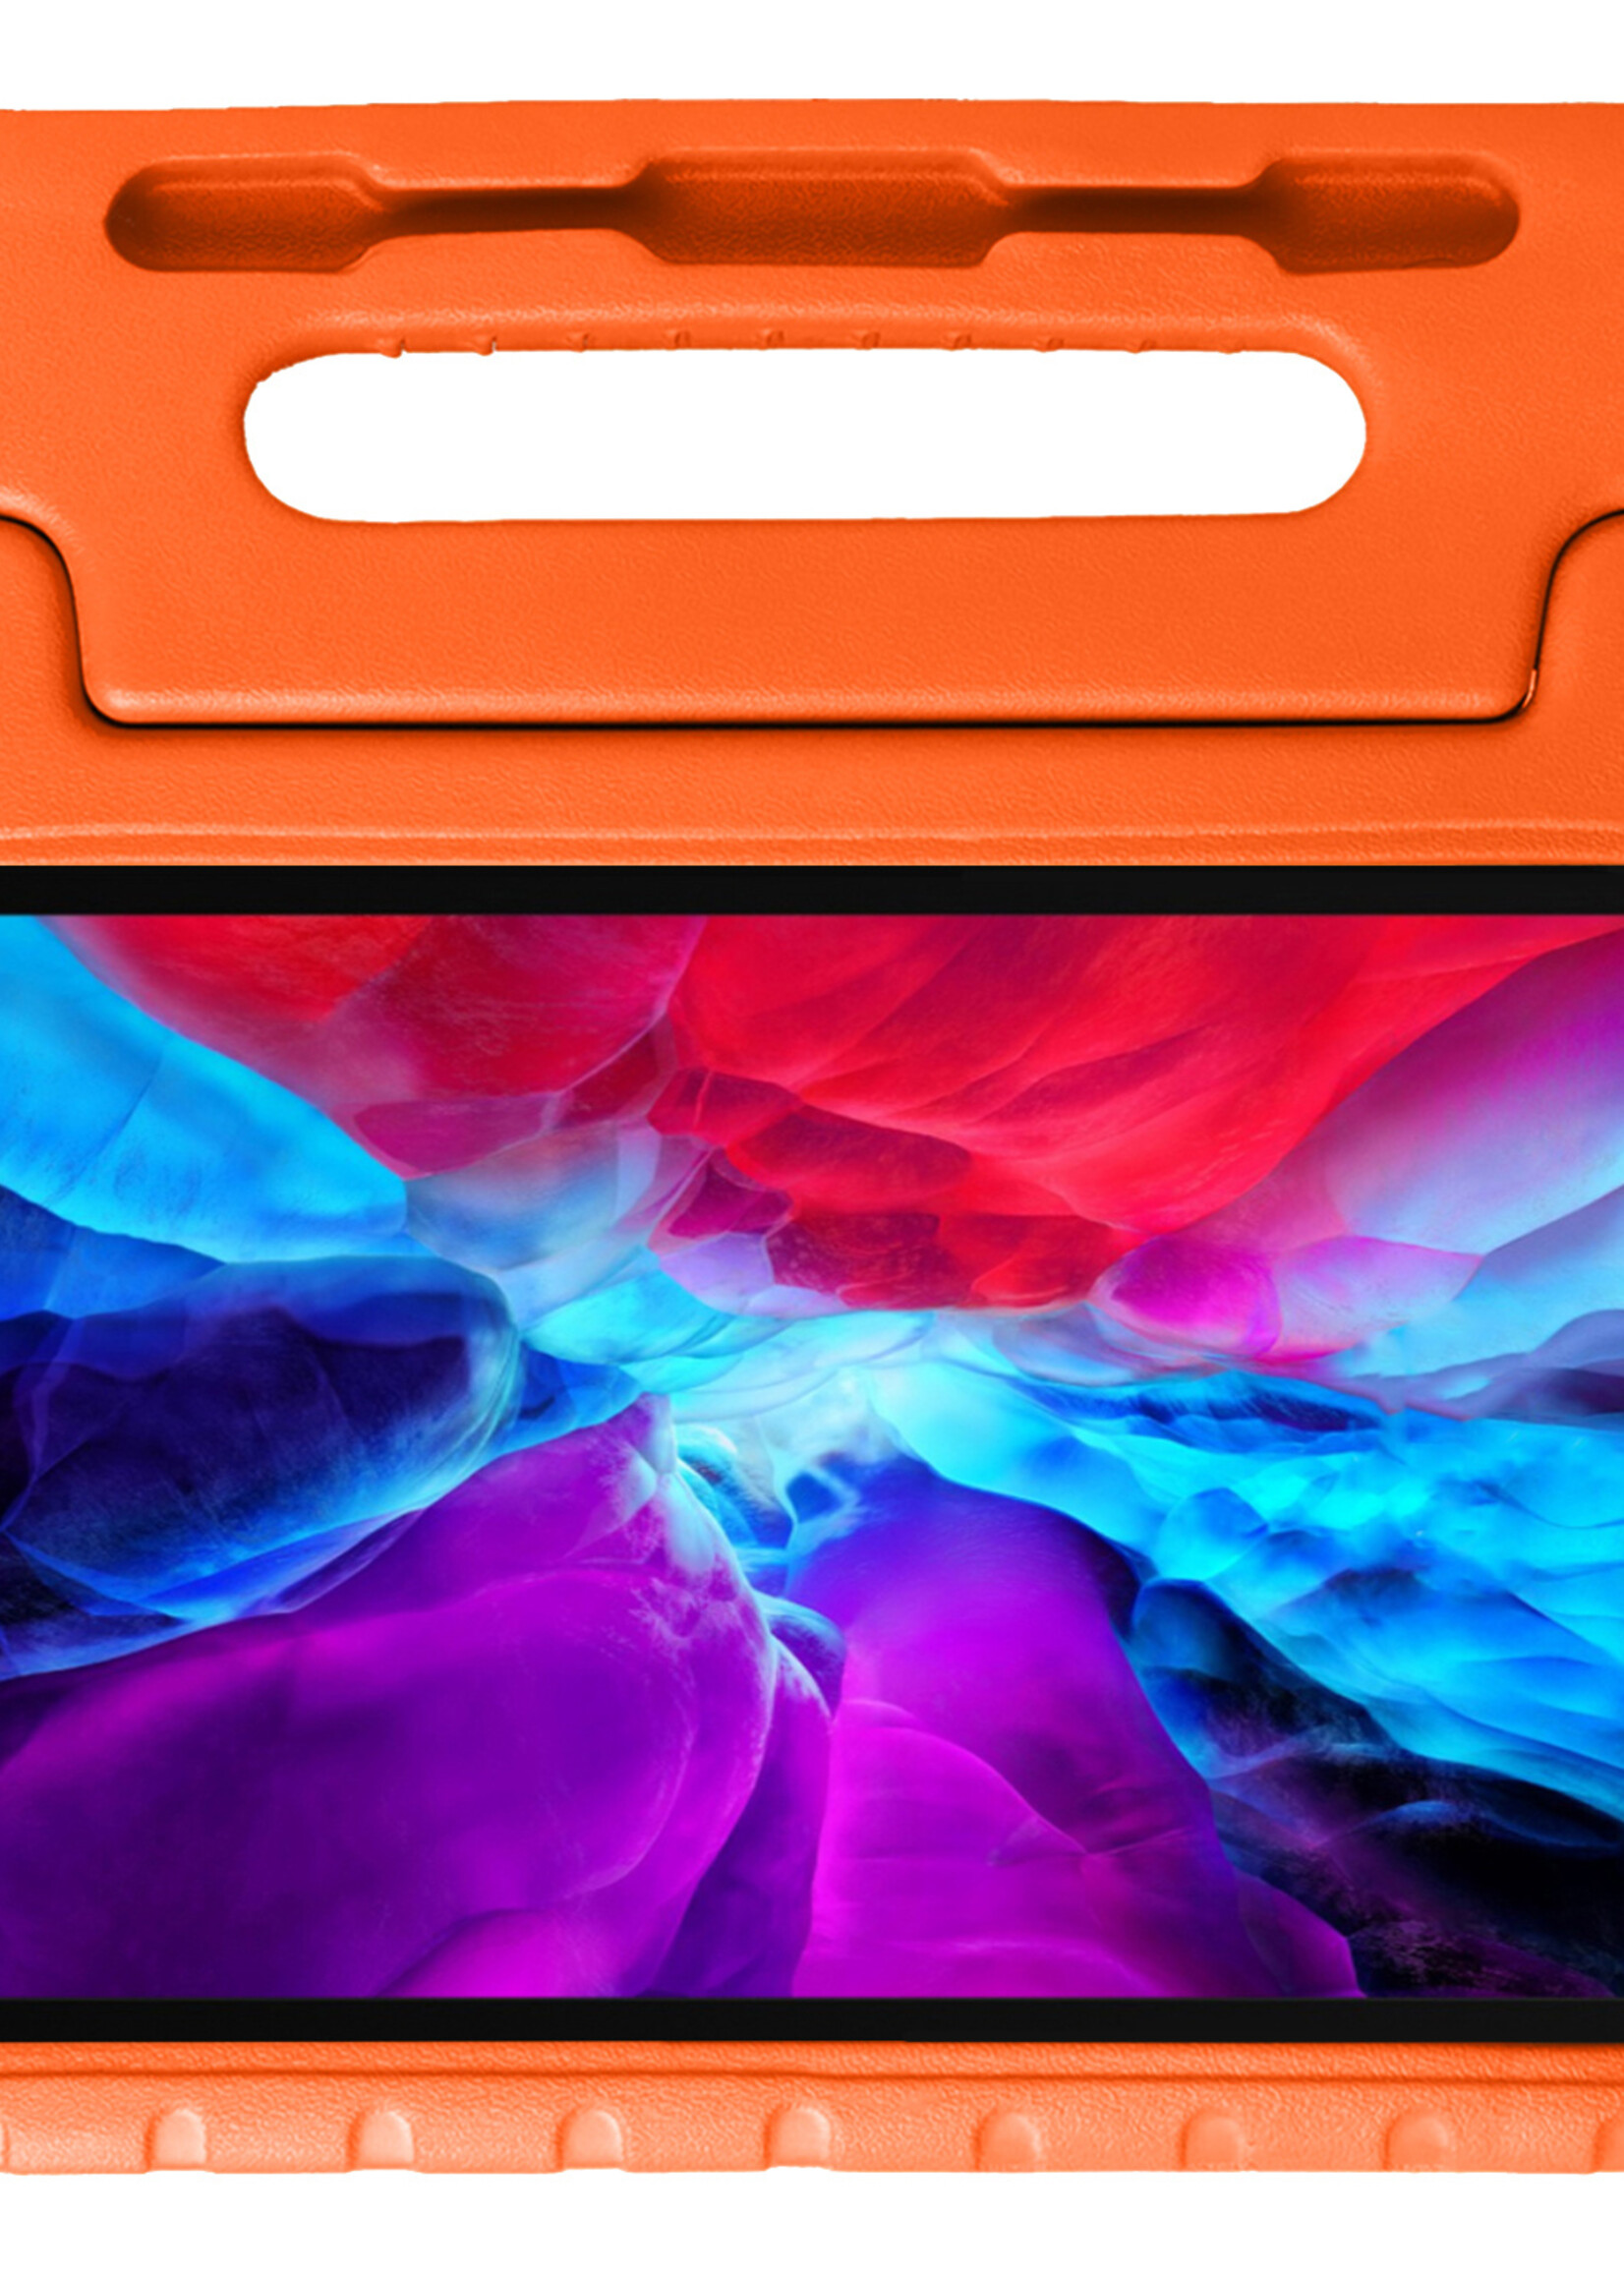 BTH BTH iPad Pro 11 inch (2022) Kinderhoes - Oranje